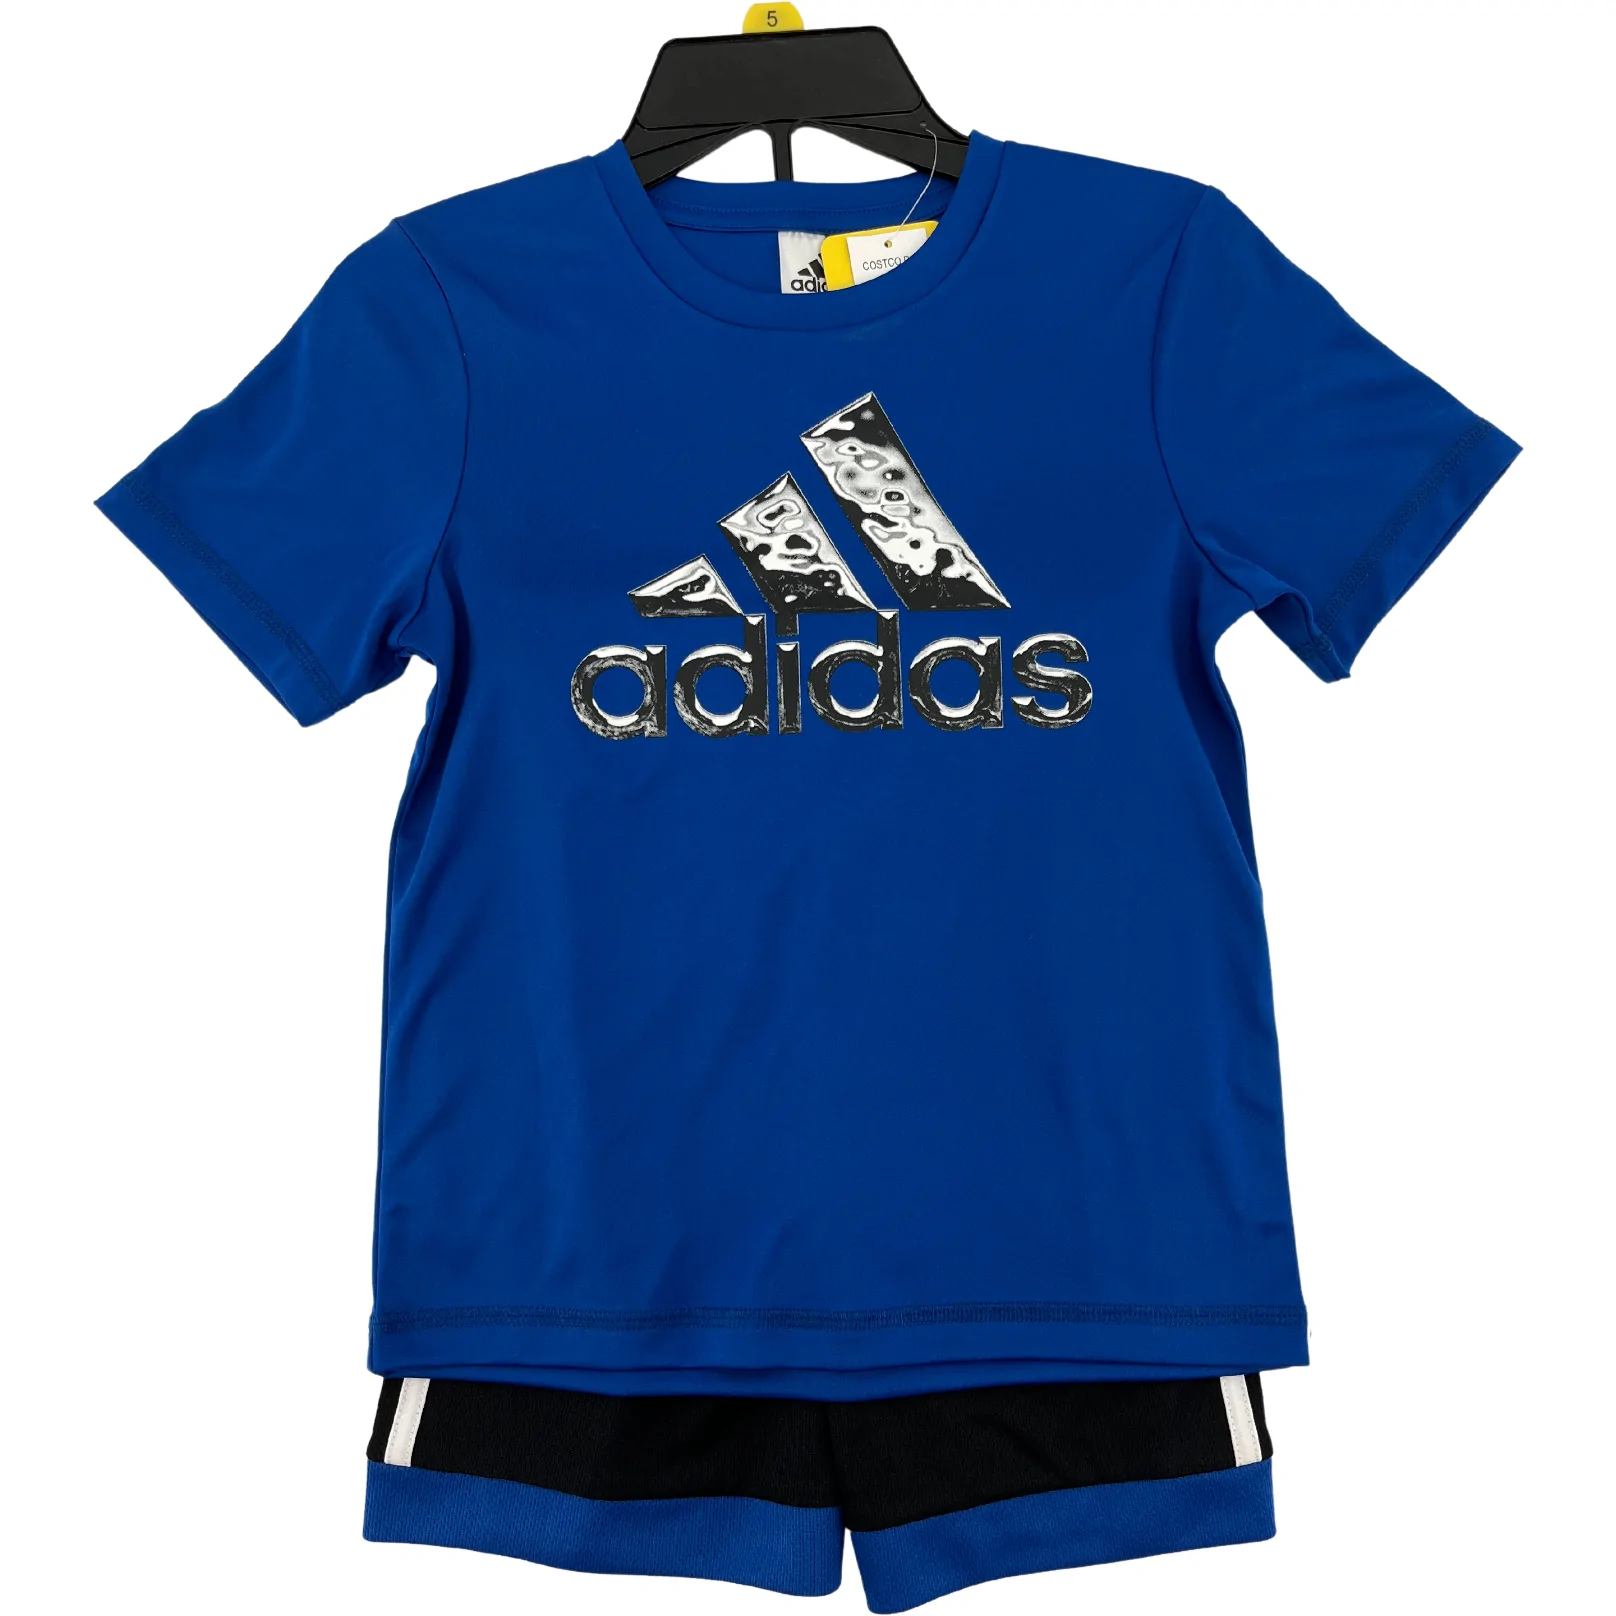 Adidas Boy's Activewear Set: Boy's Set / Shirt & Shorts / Size 5